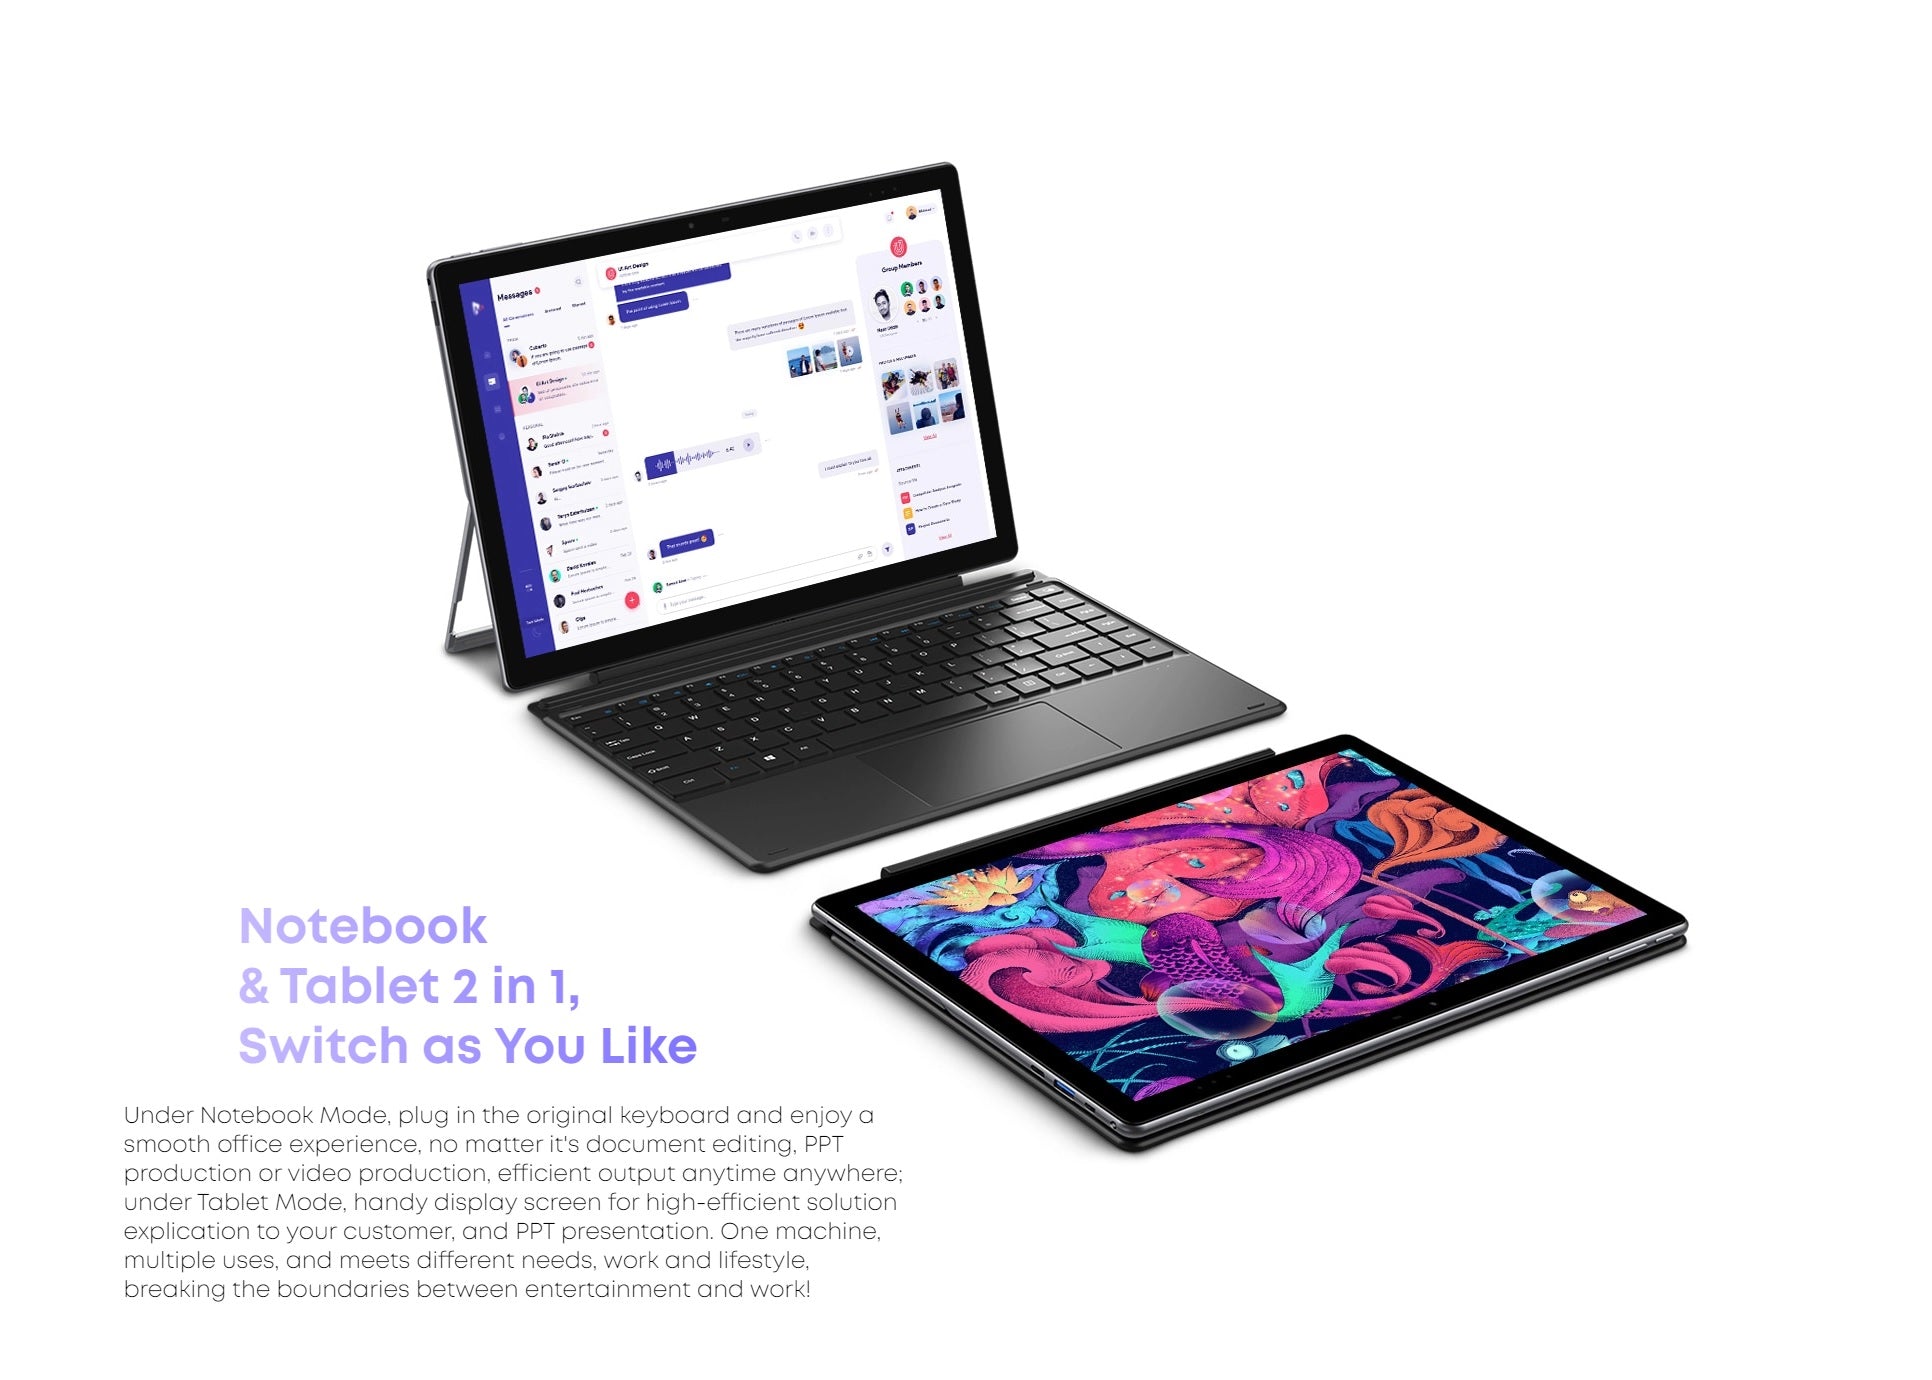 UBook XPro - Windows Laptop/Tablet PC | Intel Core i7 - ISPEKTRUM Tablets